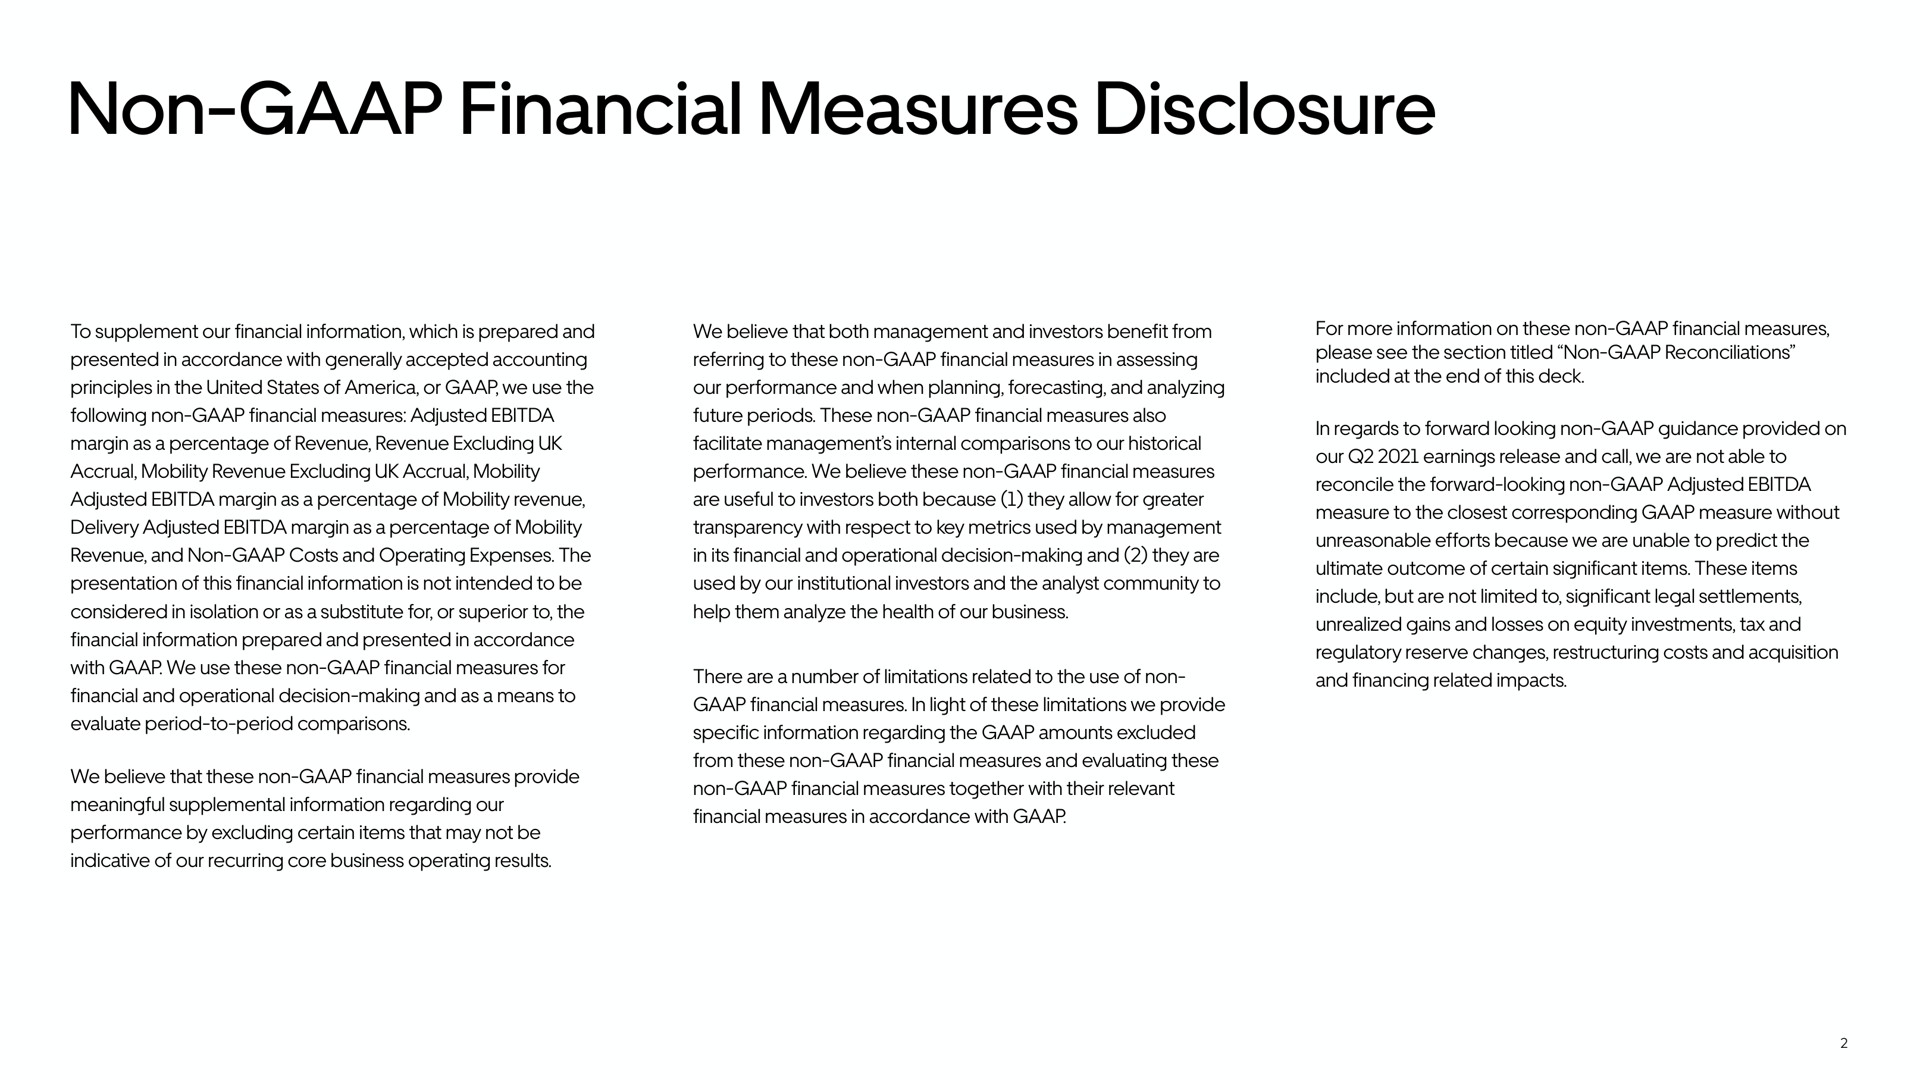 non financial measures disclosure | Uber